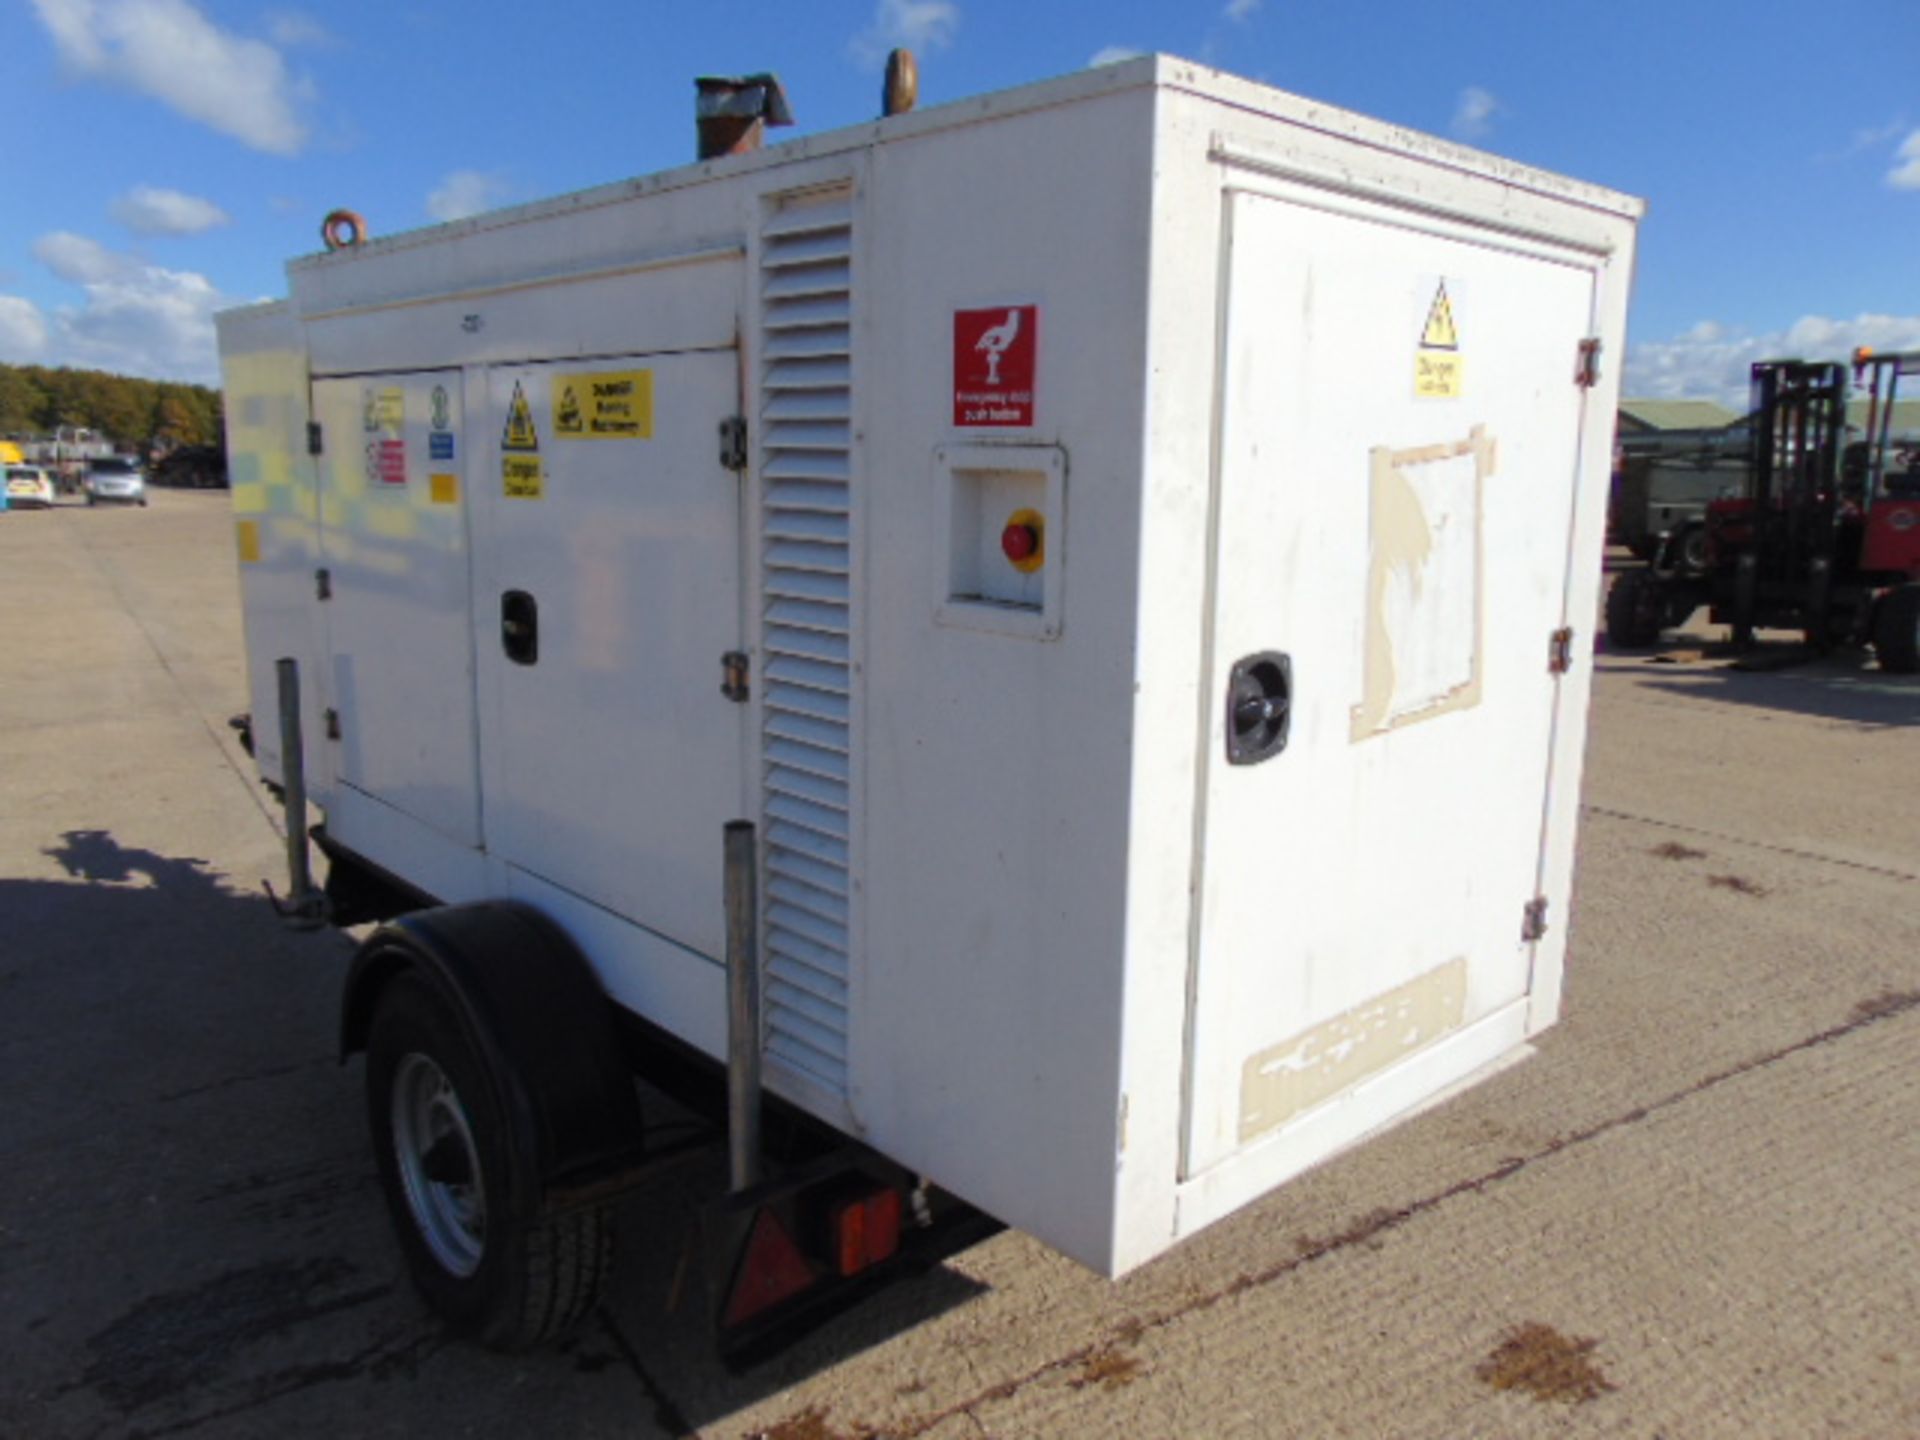 Woodlands Mecc Alte Spa ECO 32 61 KVA 3 Phase Silent Perkins Diesel Powered Generator Set - Image 4 of 19